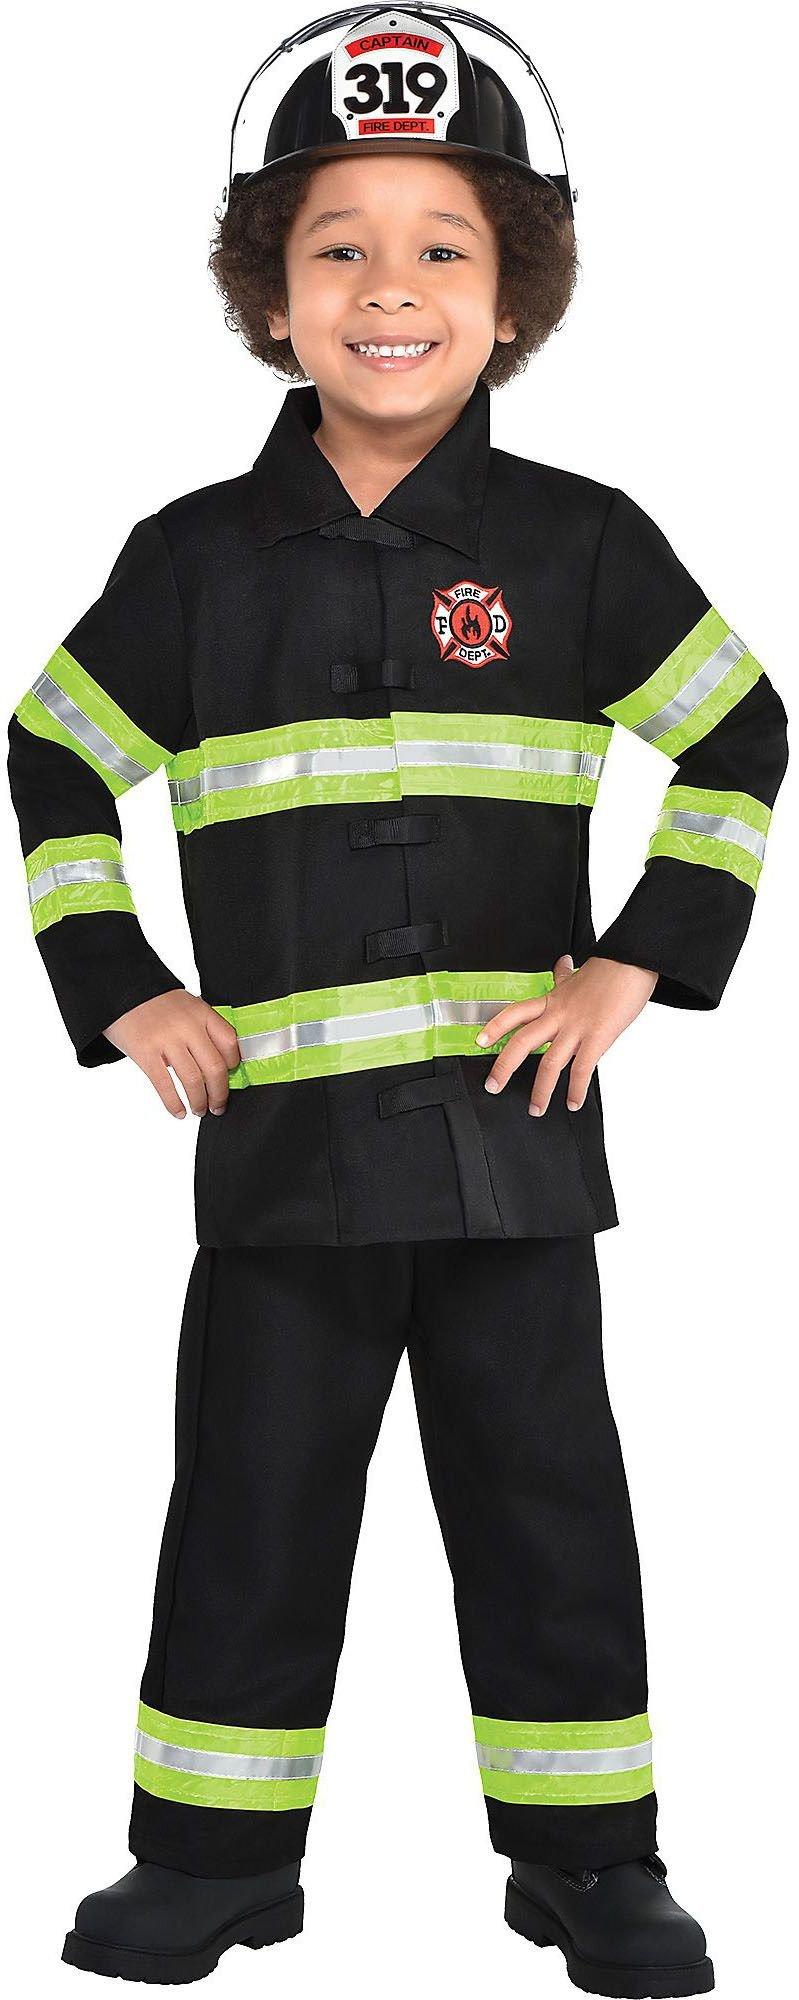 Boys Reflective Firefighter Costume | Party City